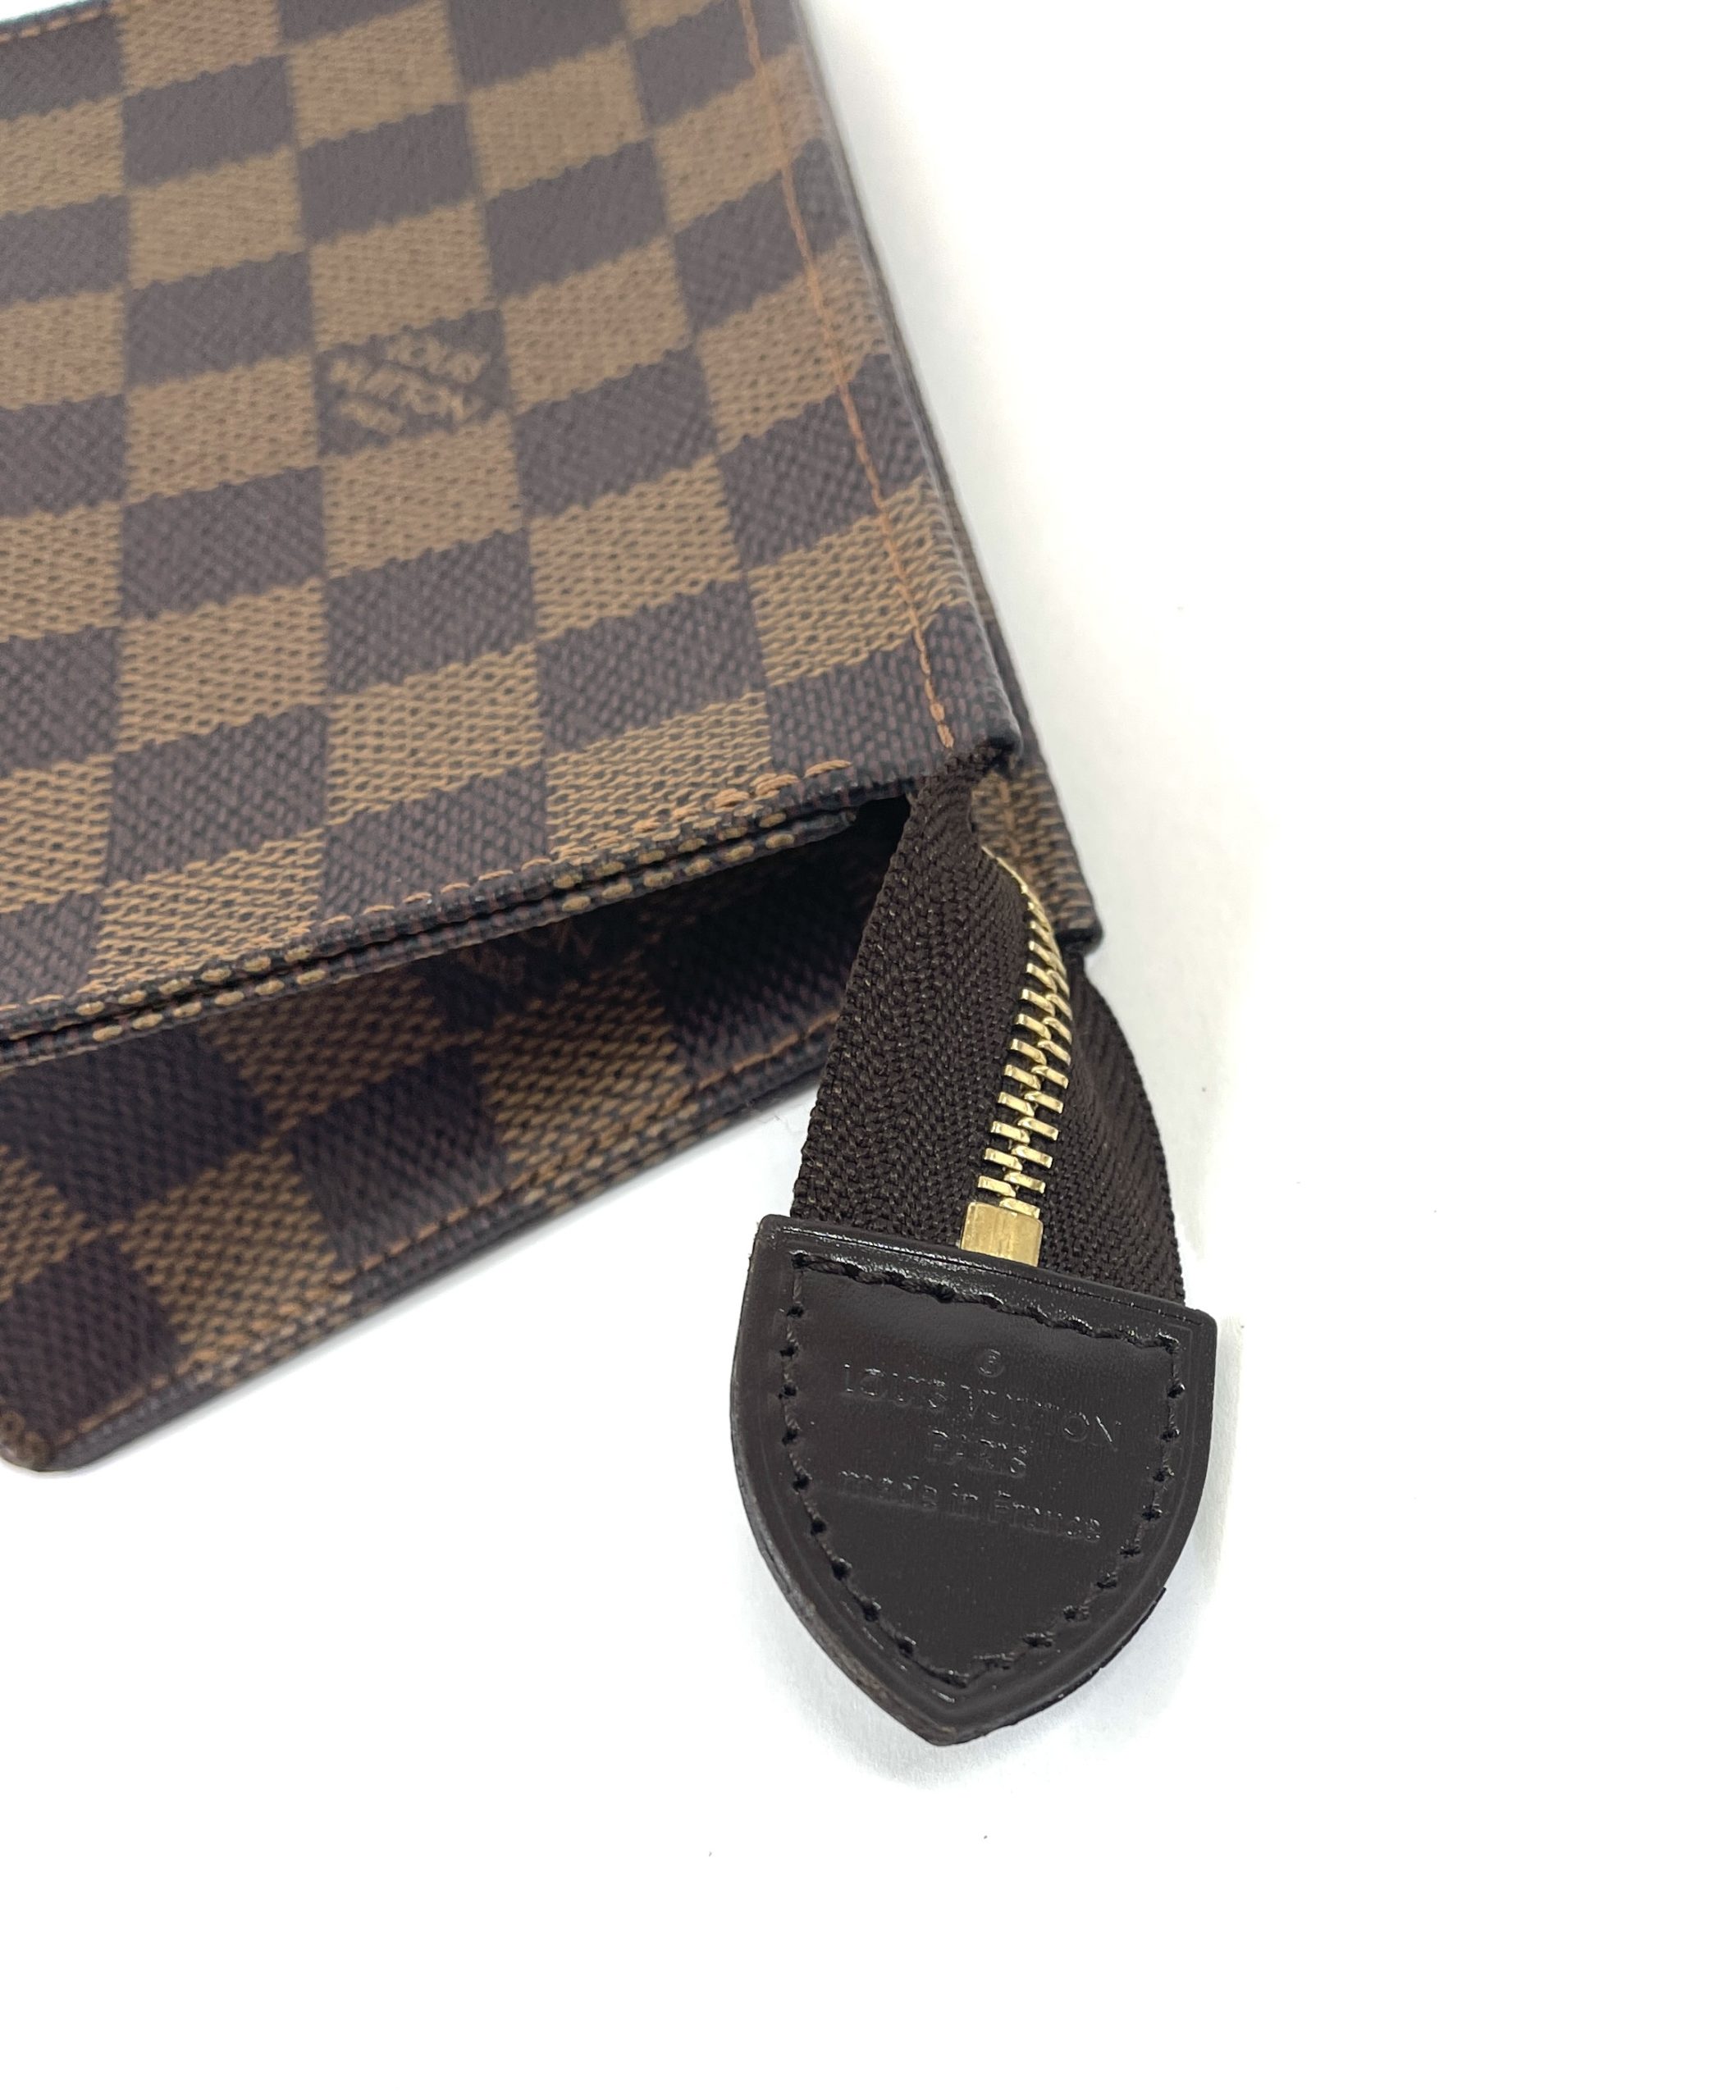 Shop Louis Vuitton Cosmetic pouch (M47515, N60024, N47516) by BeBeauty